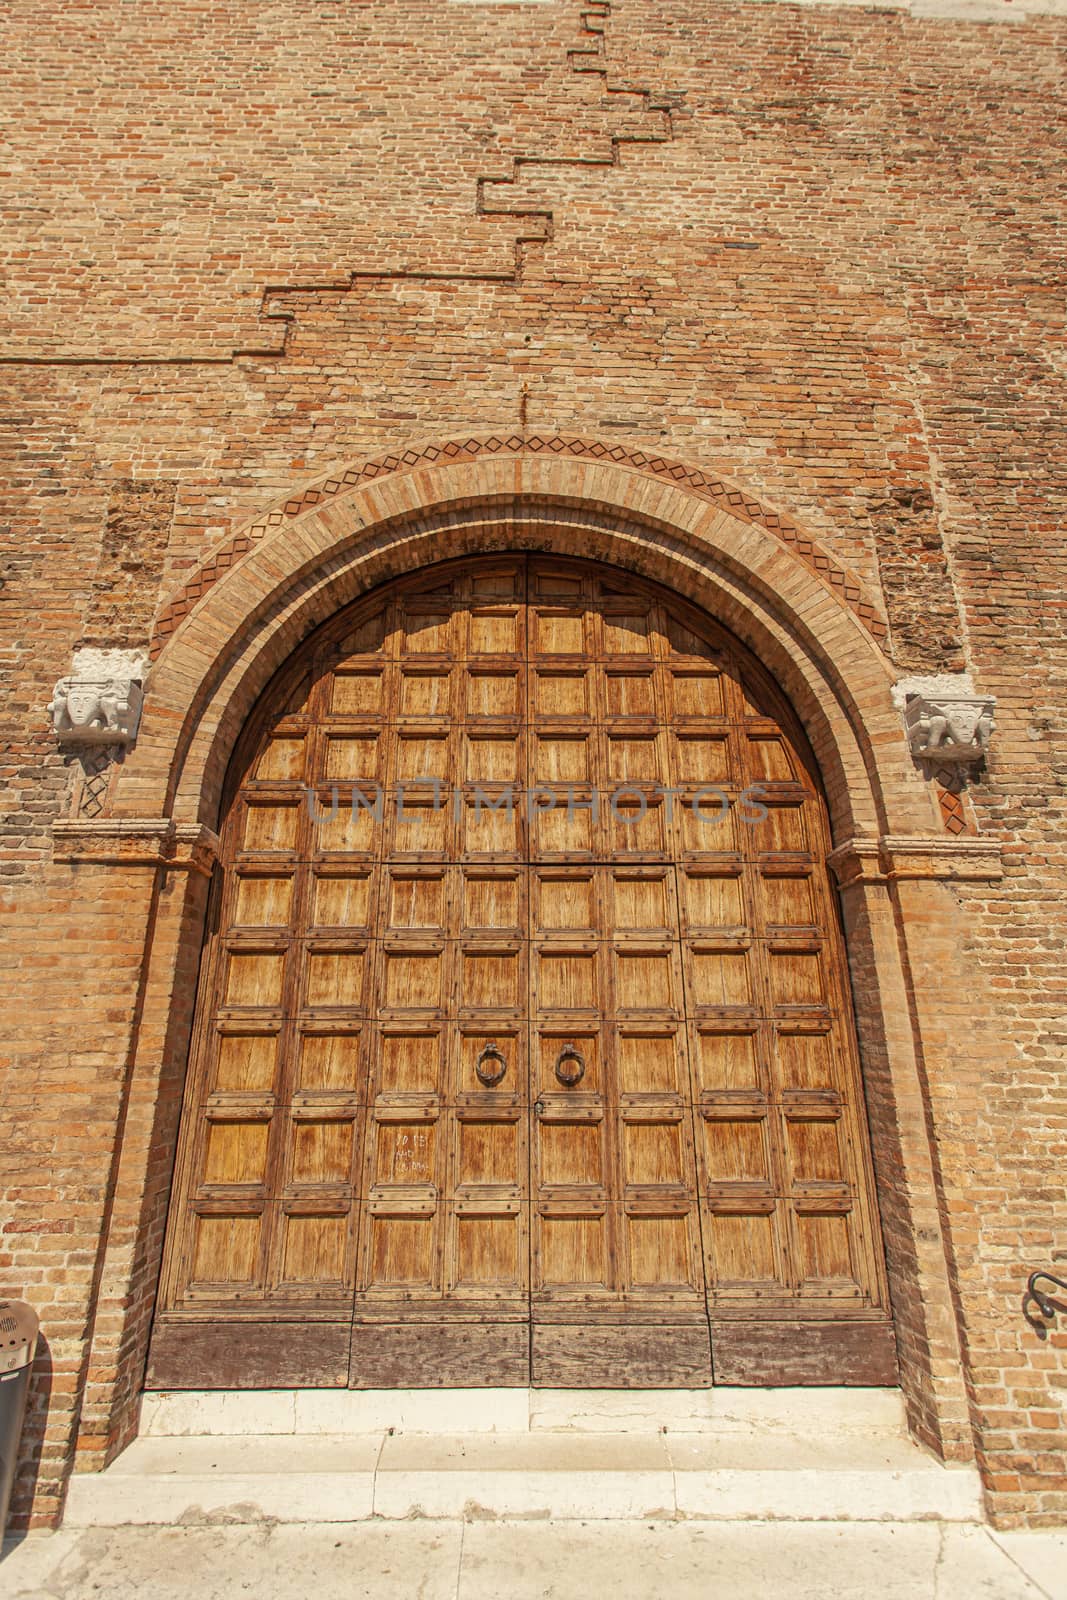 Door of Palazzo dei trecento in Treviso in Italy by pippocarlot